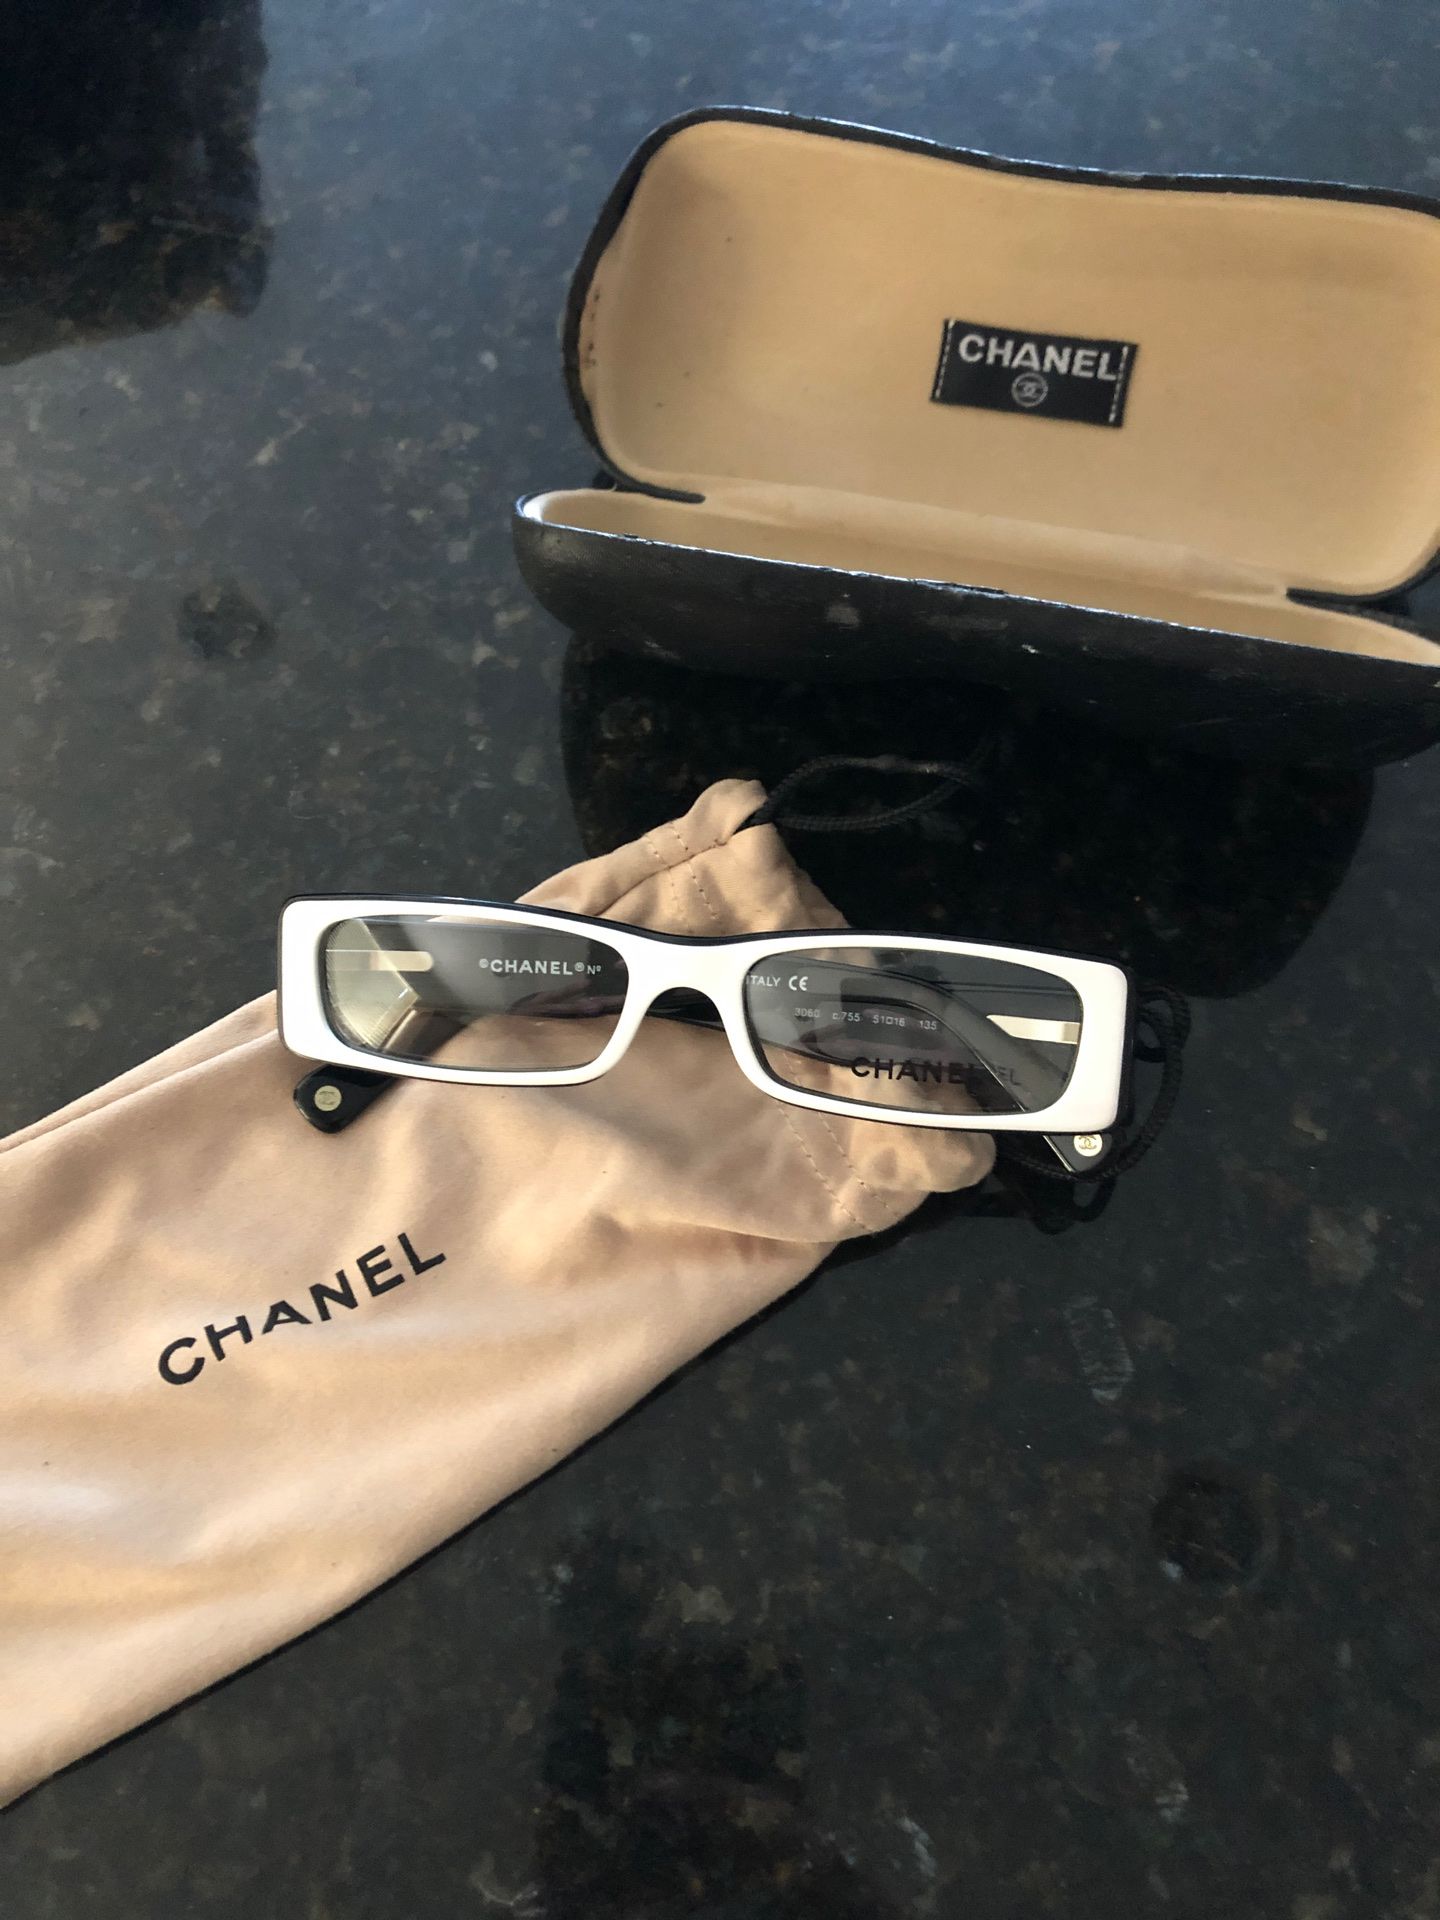 Chanel glasses - never worn brand new